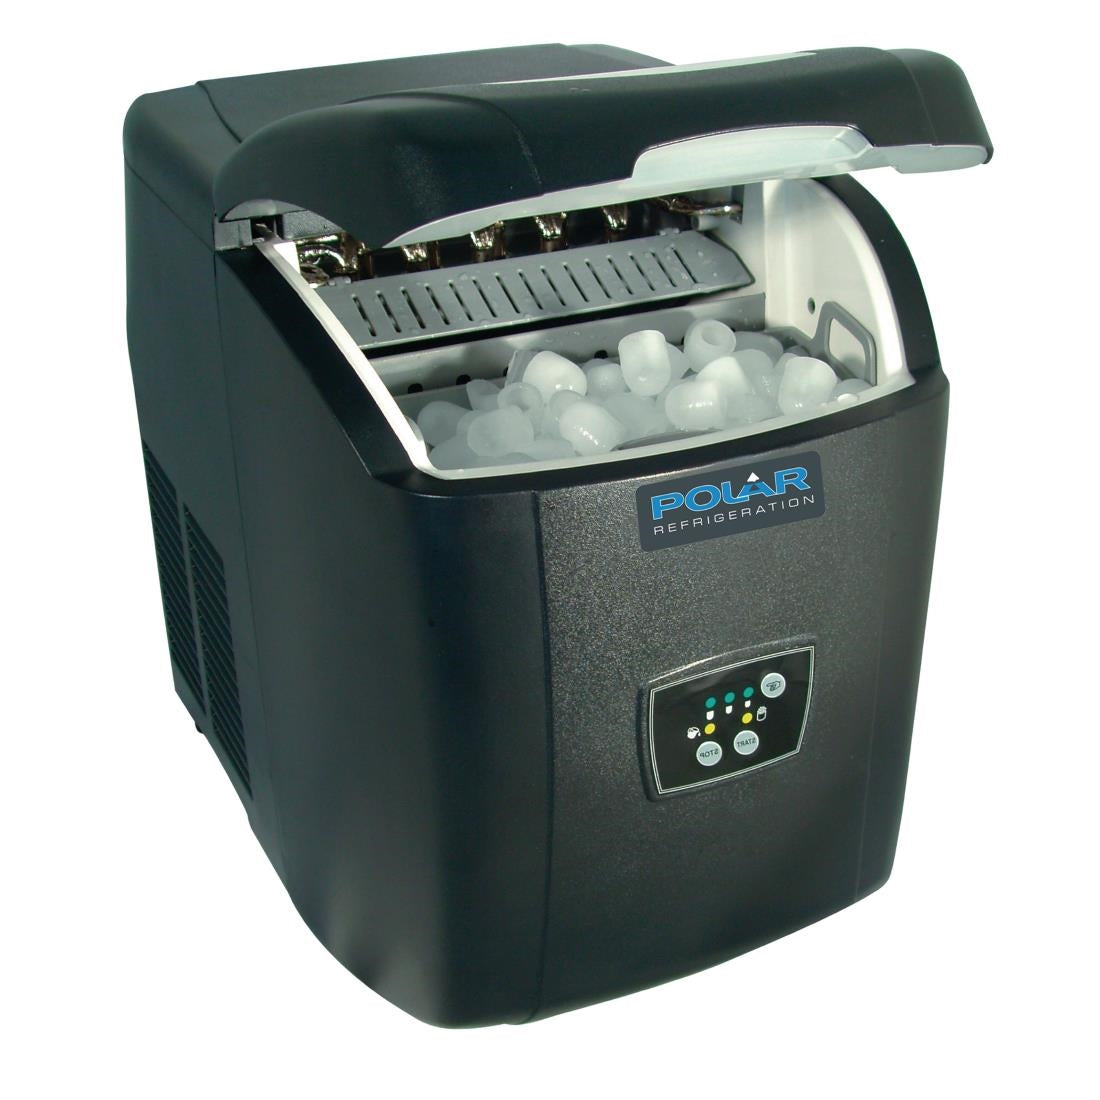 T315 Polar C-Series Countertop Ice Machine 11kg Output T315